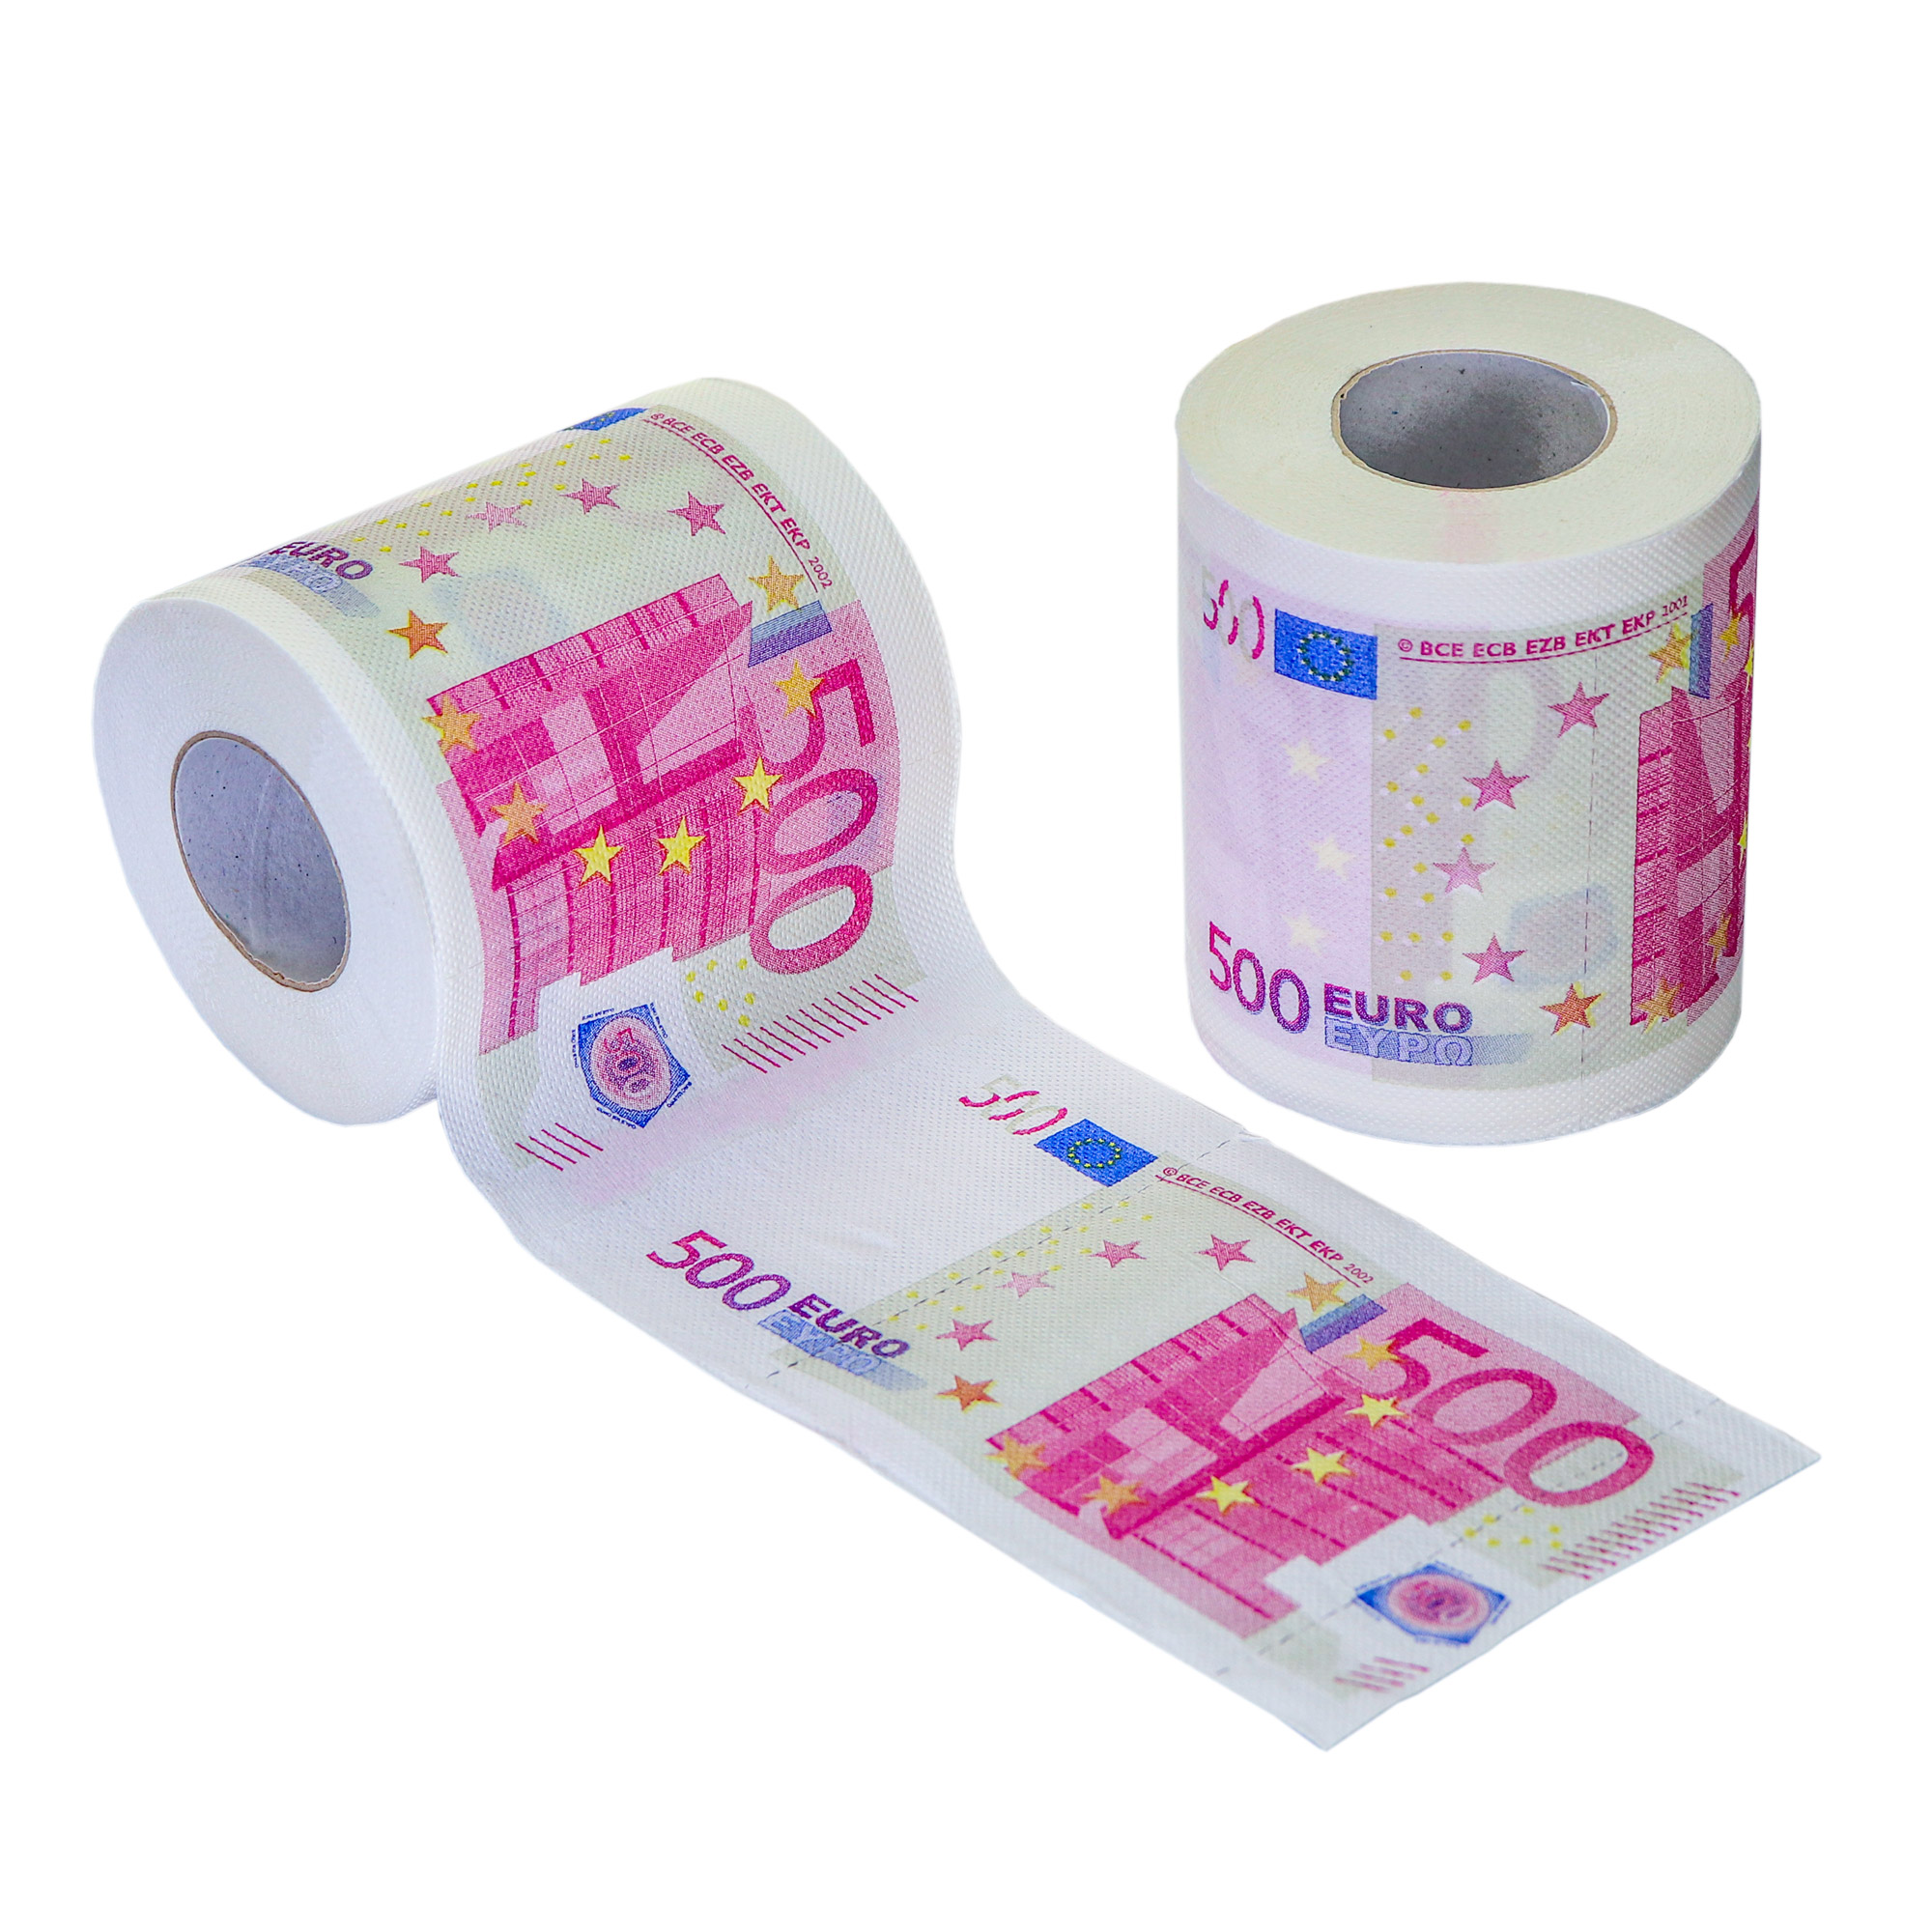 Geld Toilettenpapier - 500 Euro - 2er Set 4127 - 1